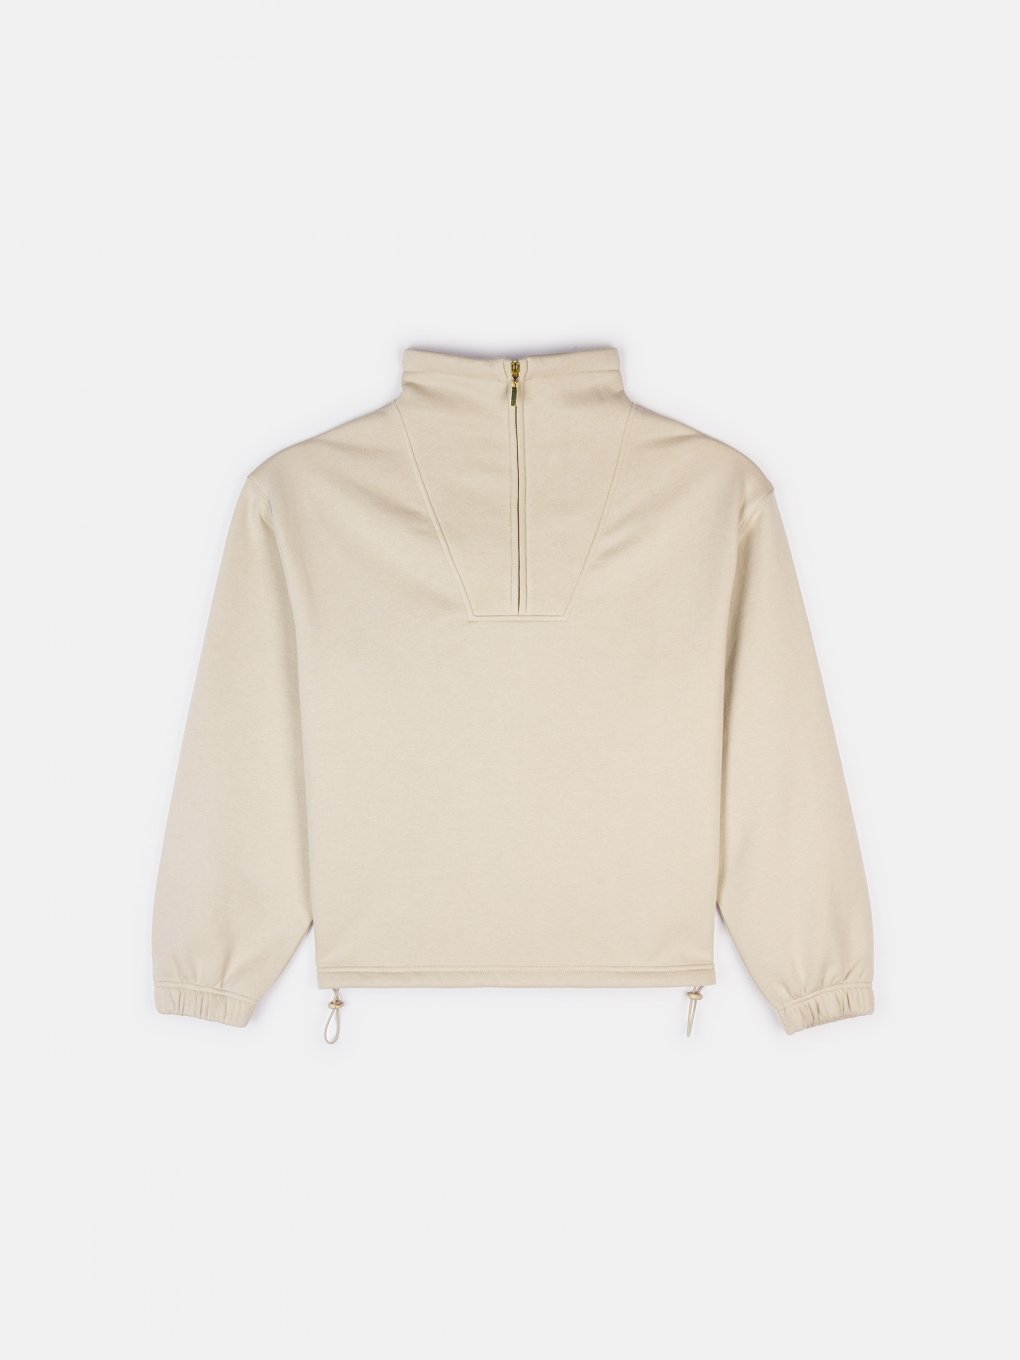 Sweatshirt with a zipper